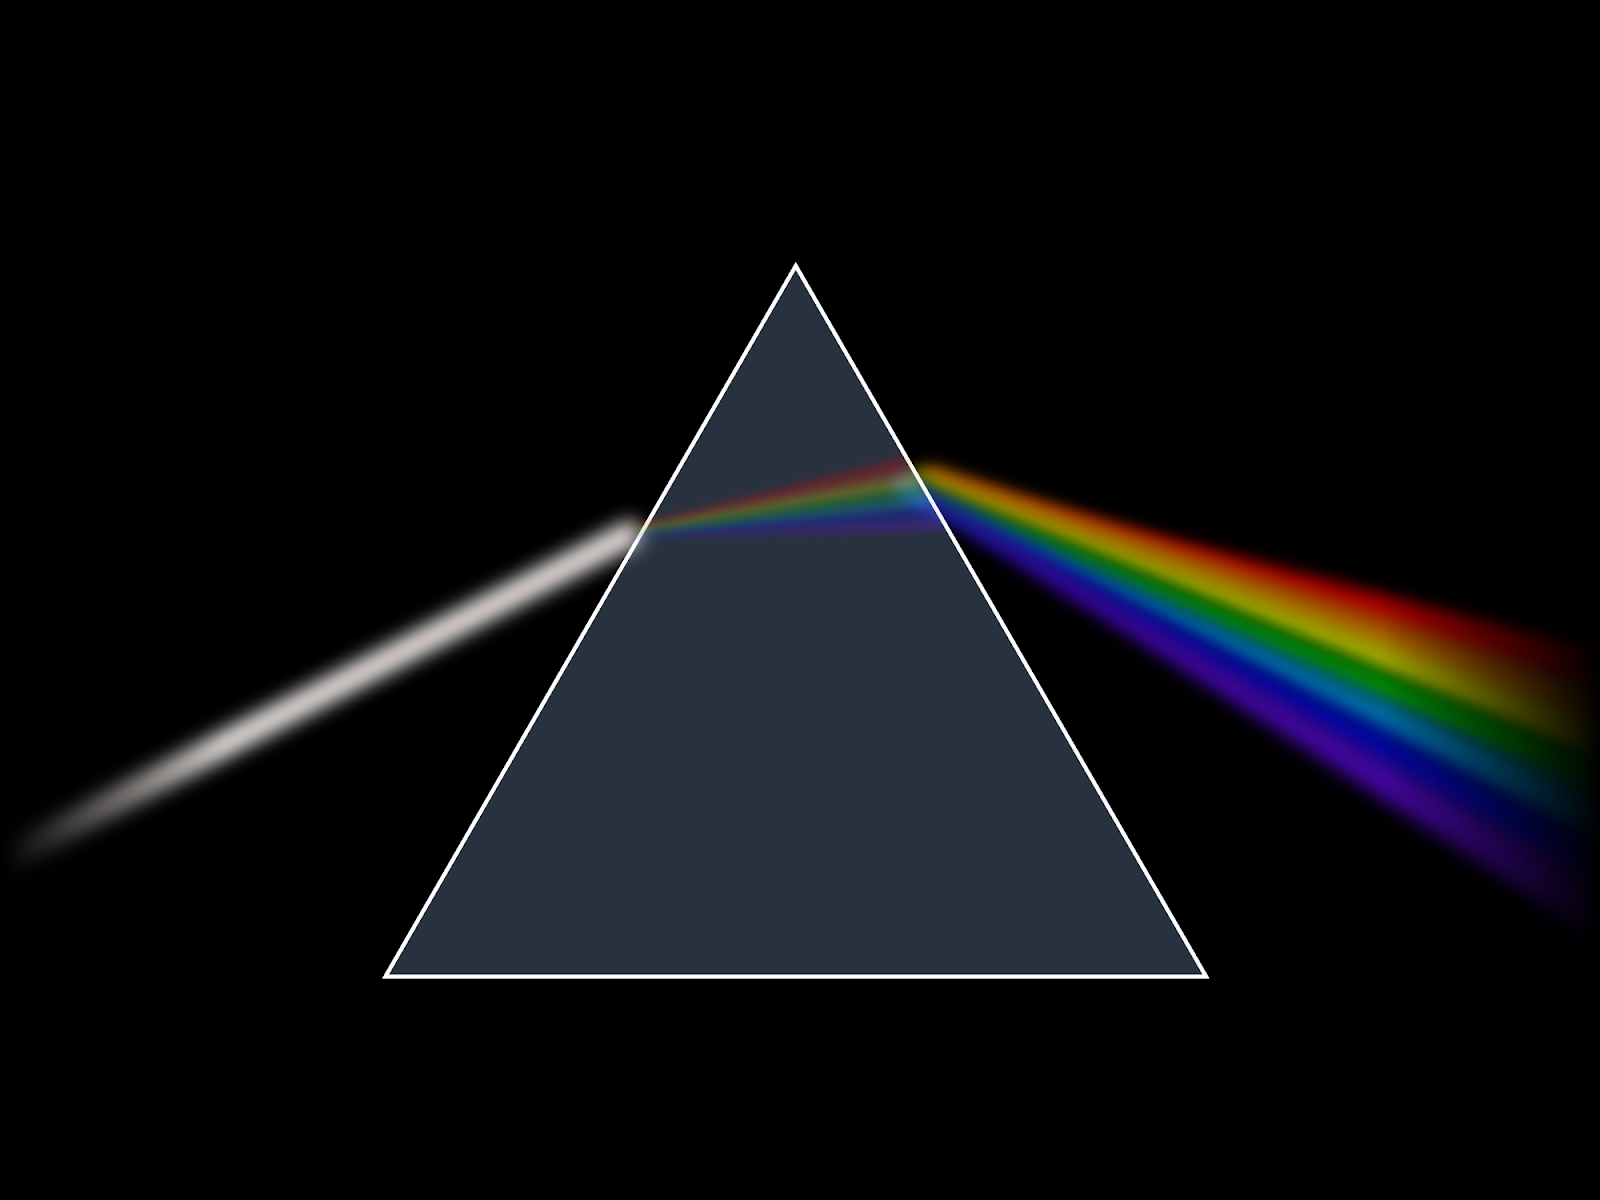 Rainbow gravity theory